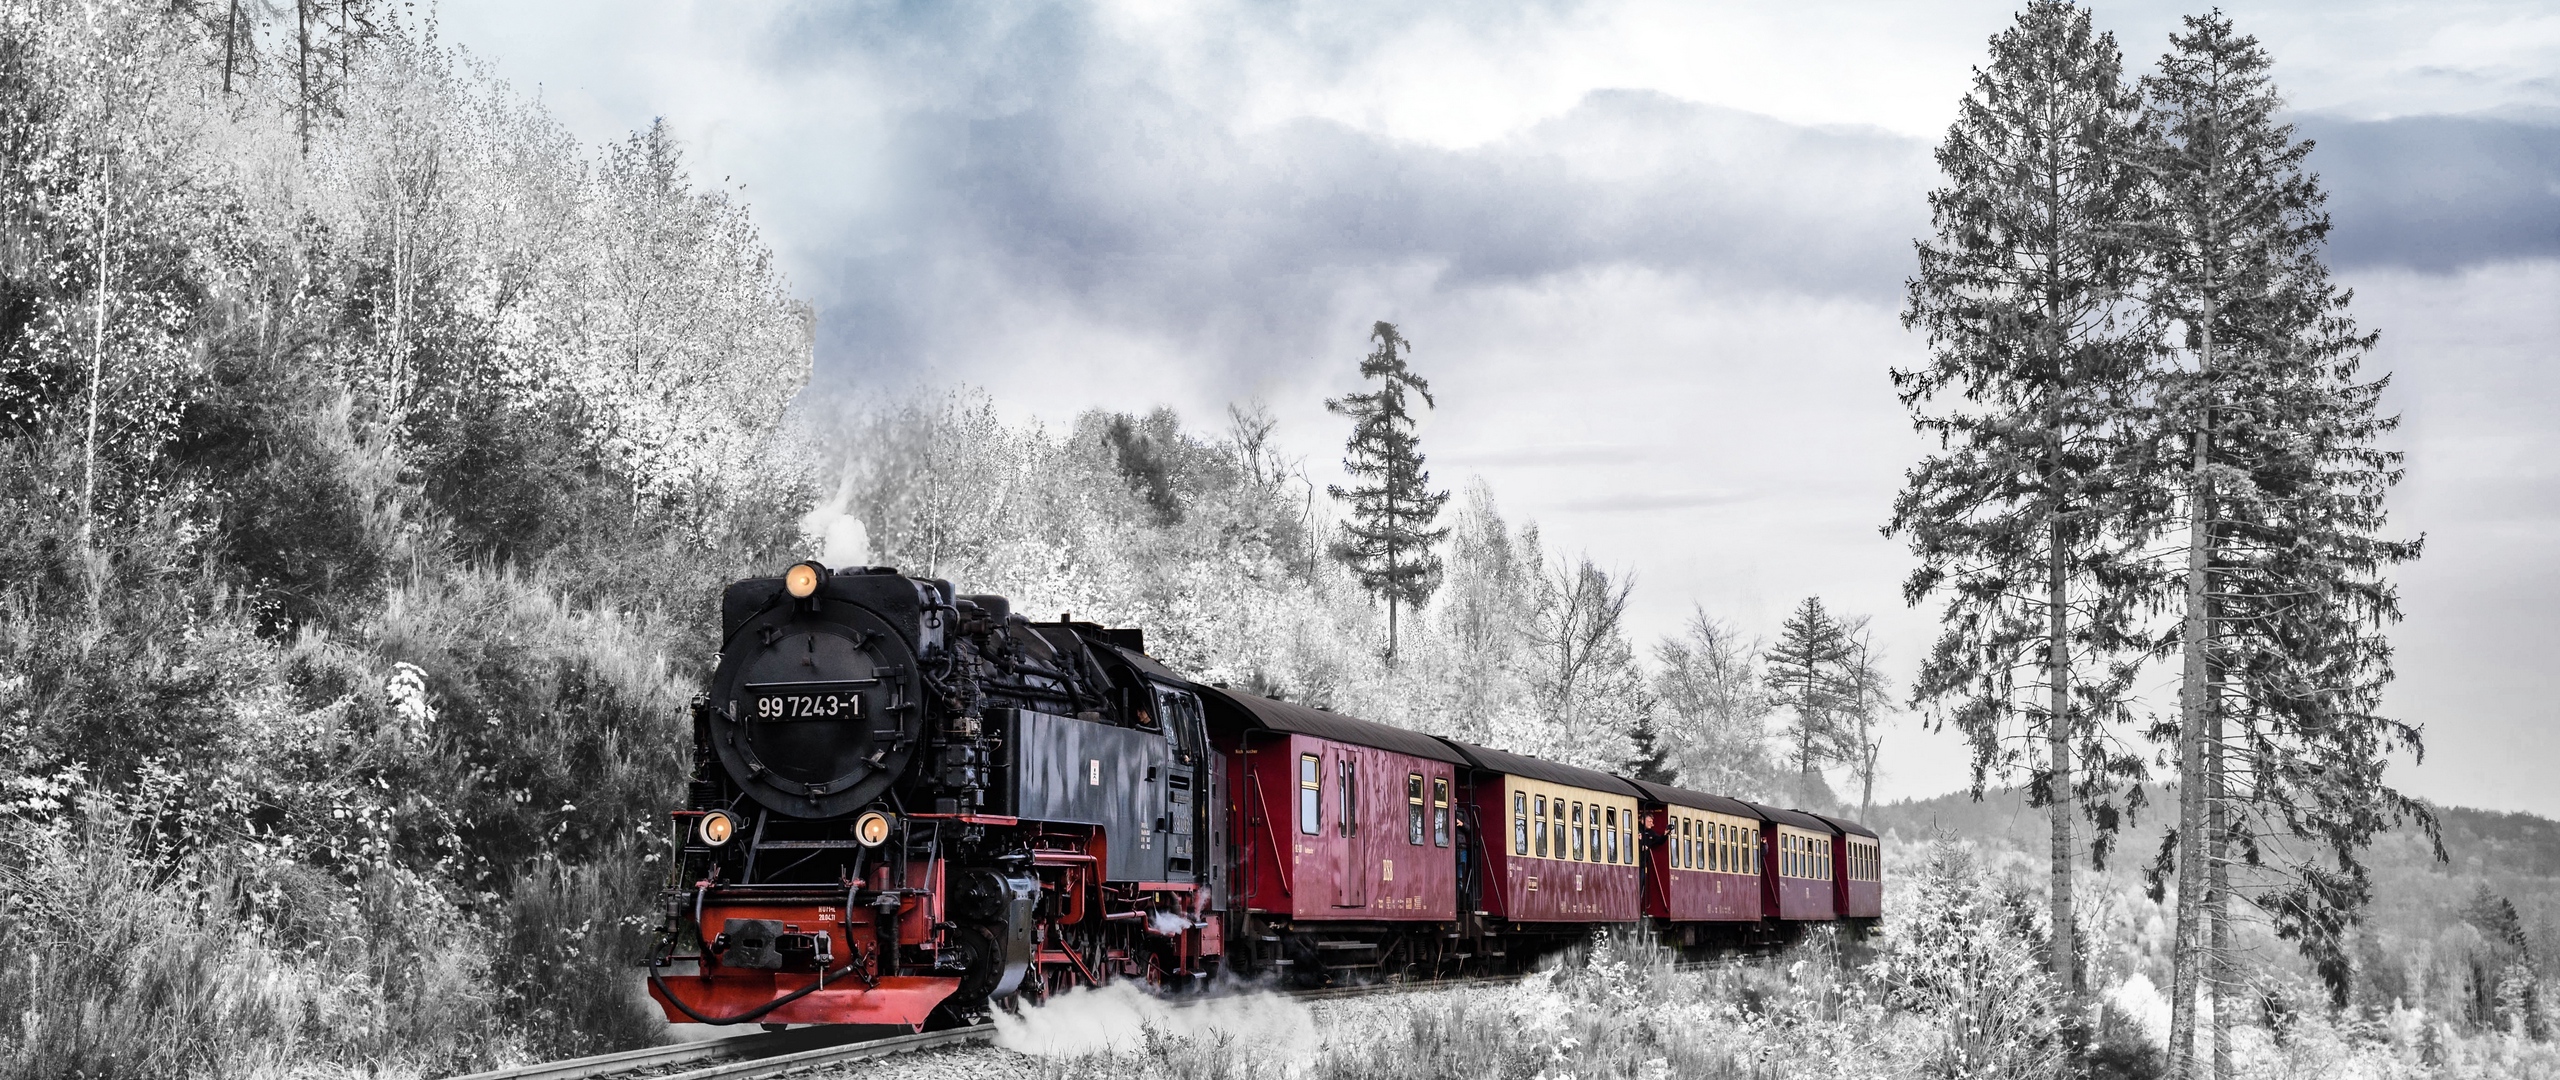 Download wallpaper 2560x1080 train, forest, winter, railway